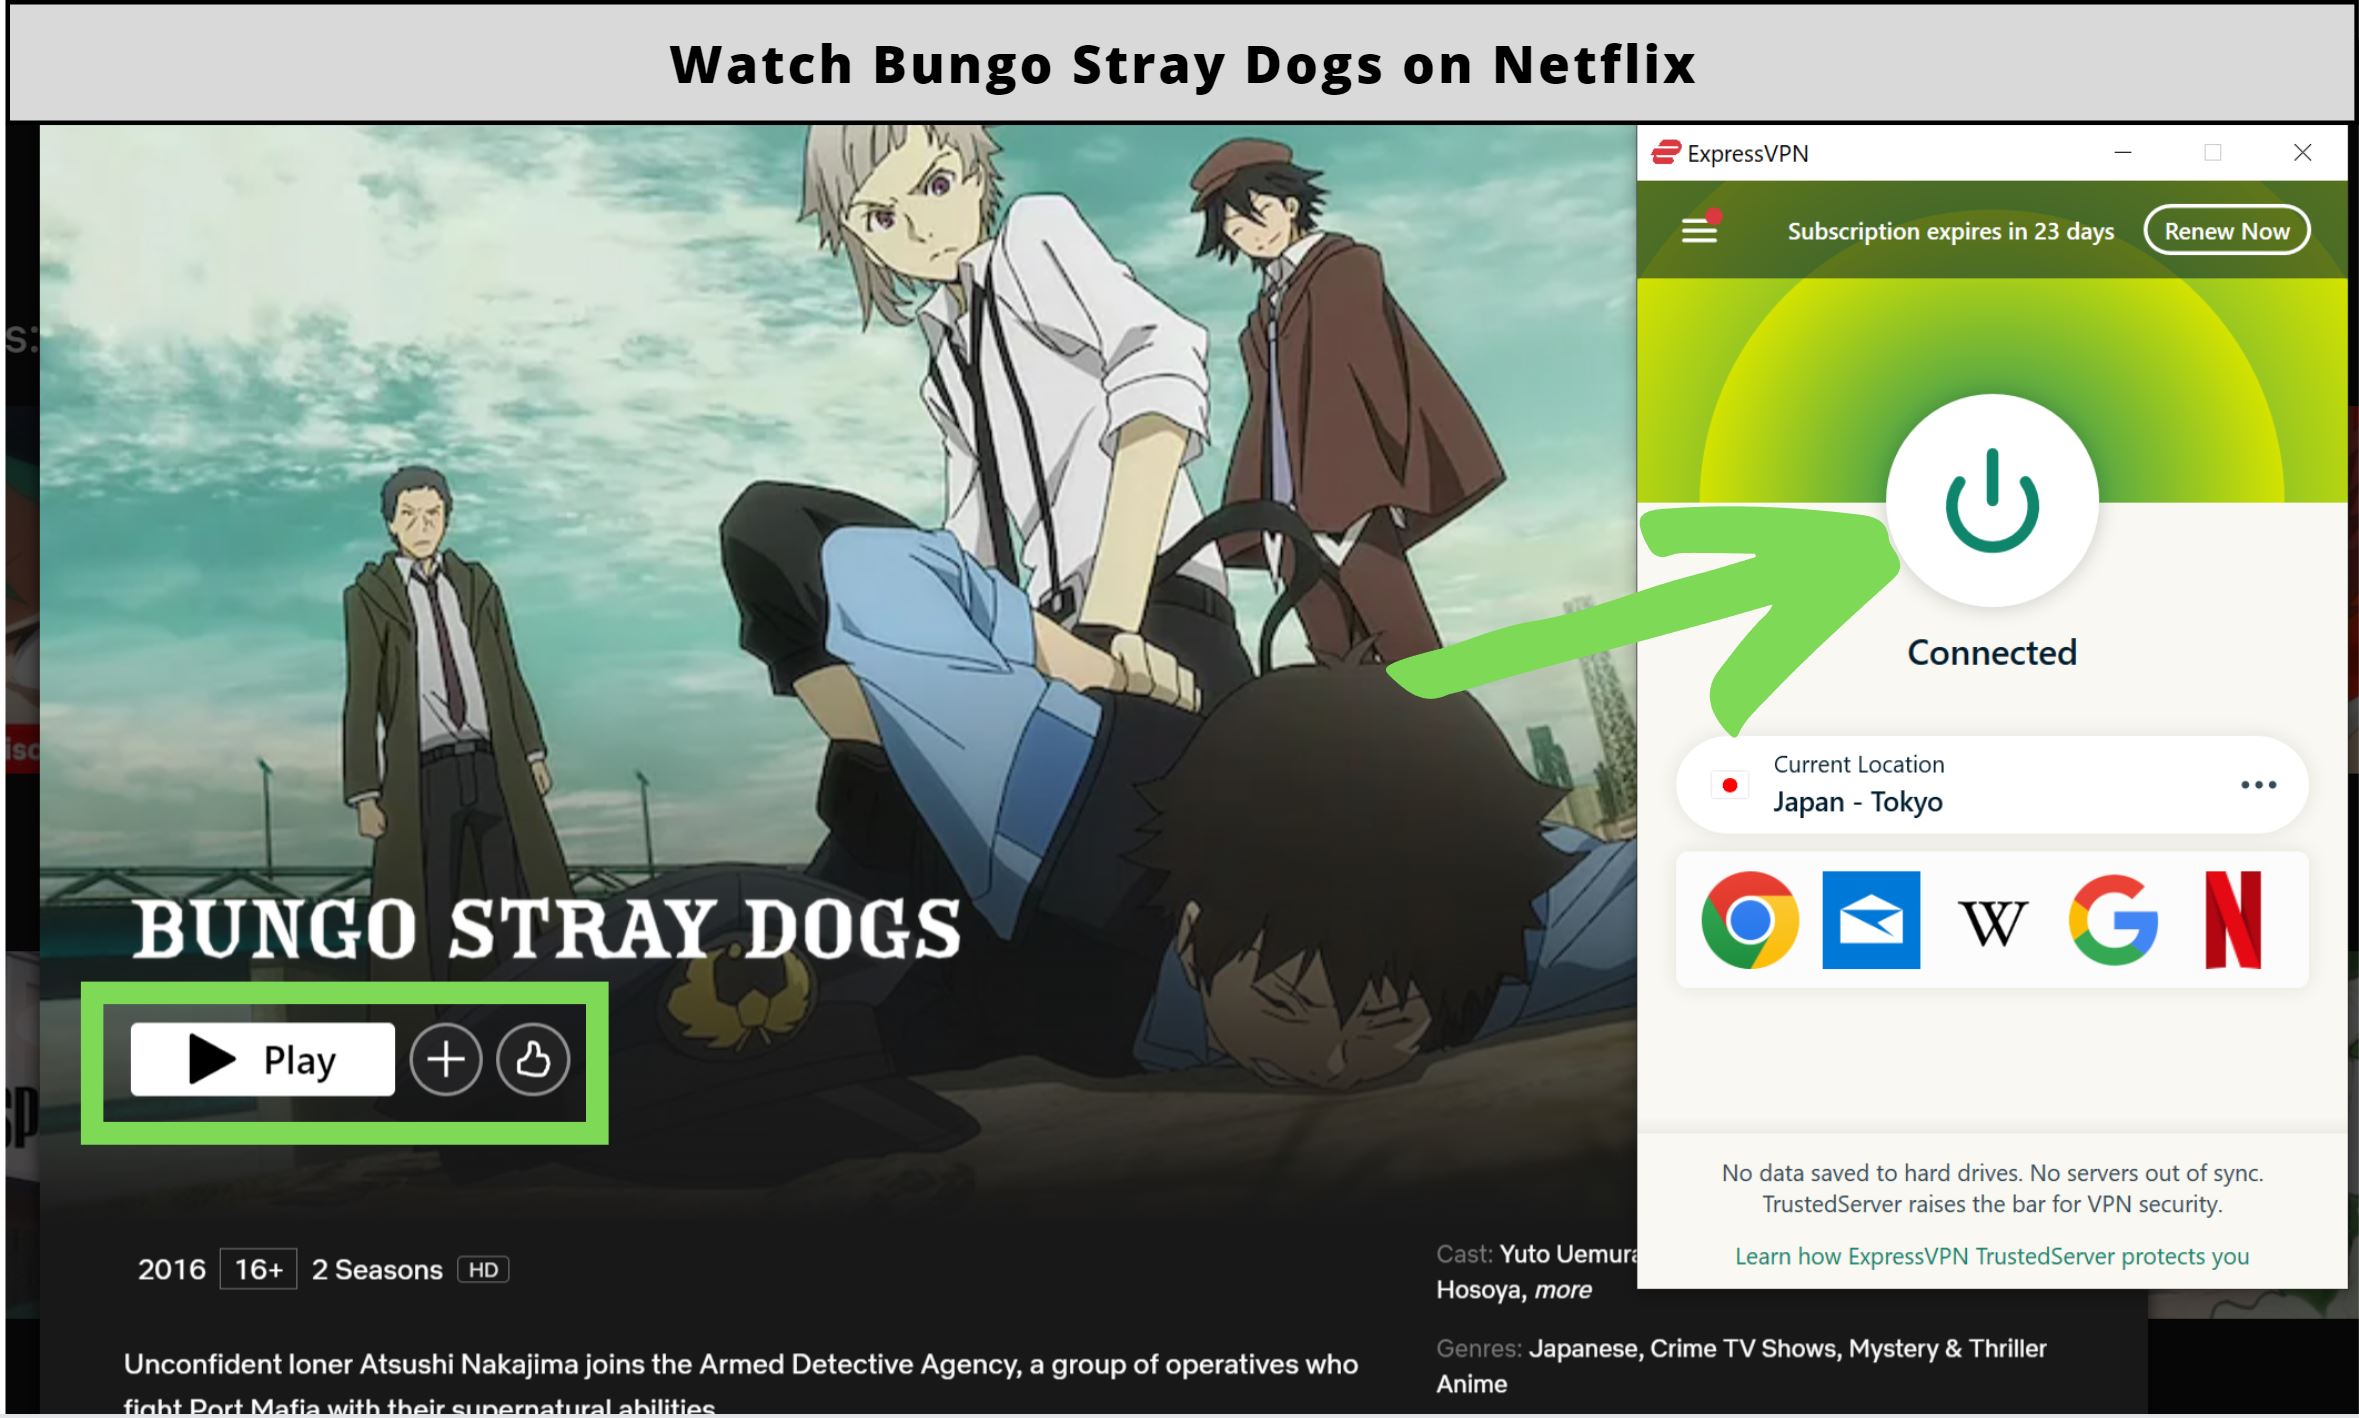 Is Bungo Stray Dogs on Netflix